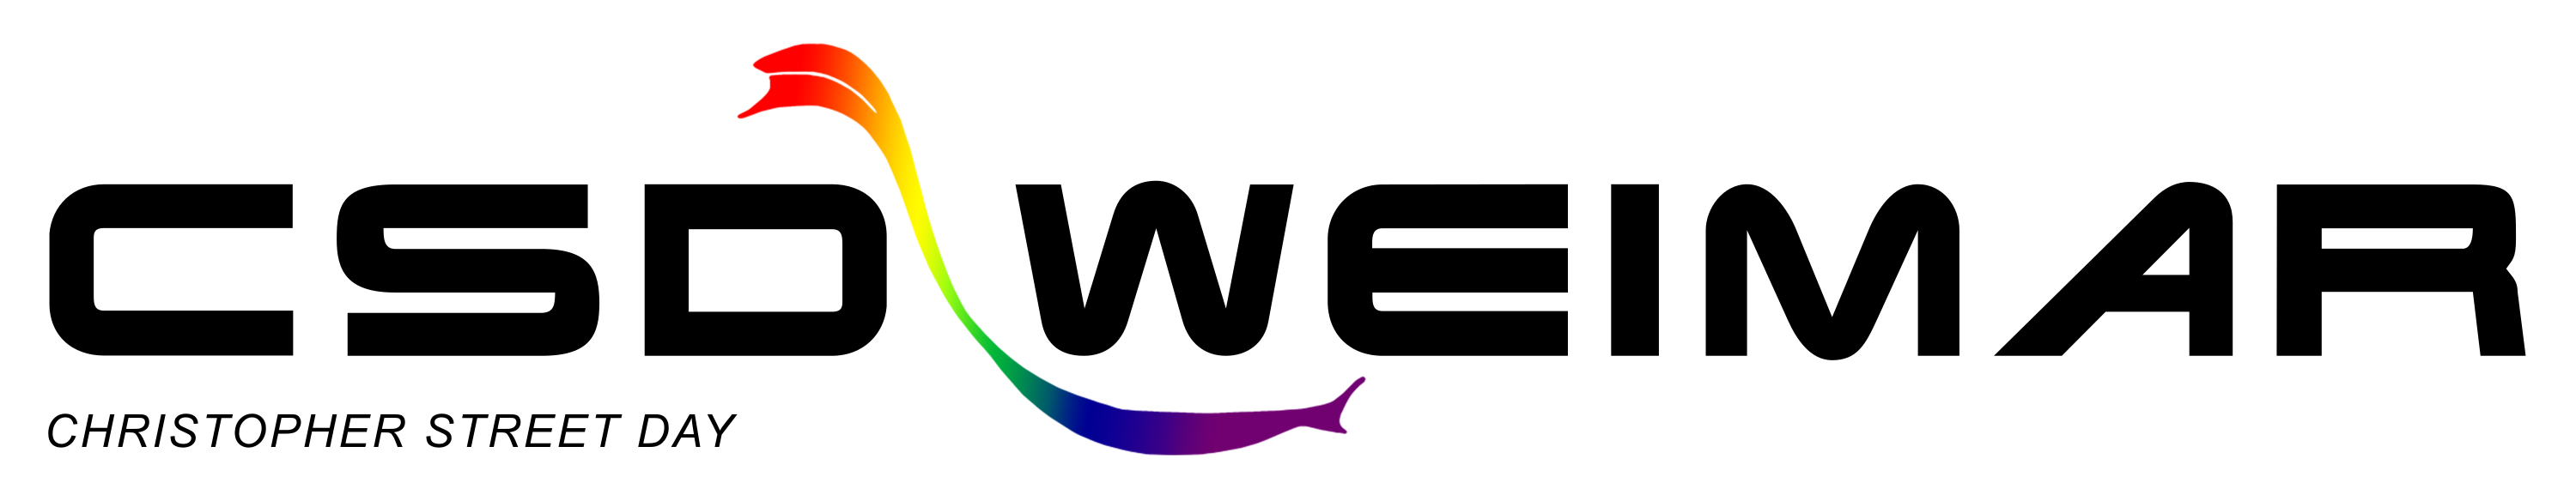 CSDWeimar-Logo-2017-02-02-3000x584.png